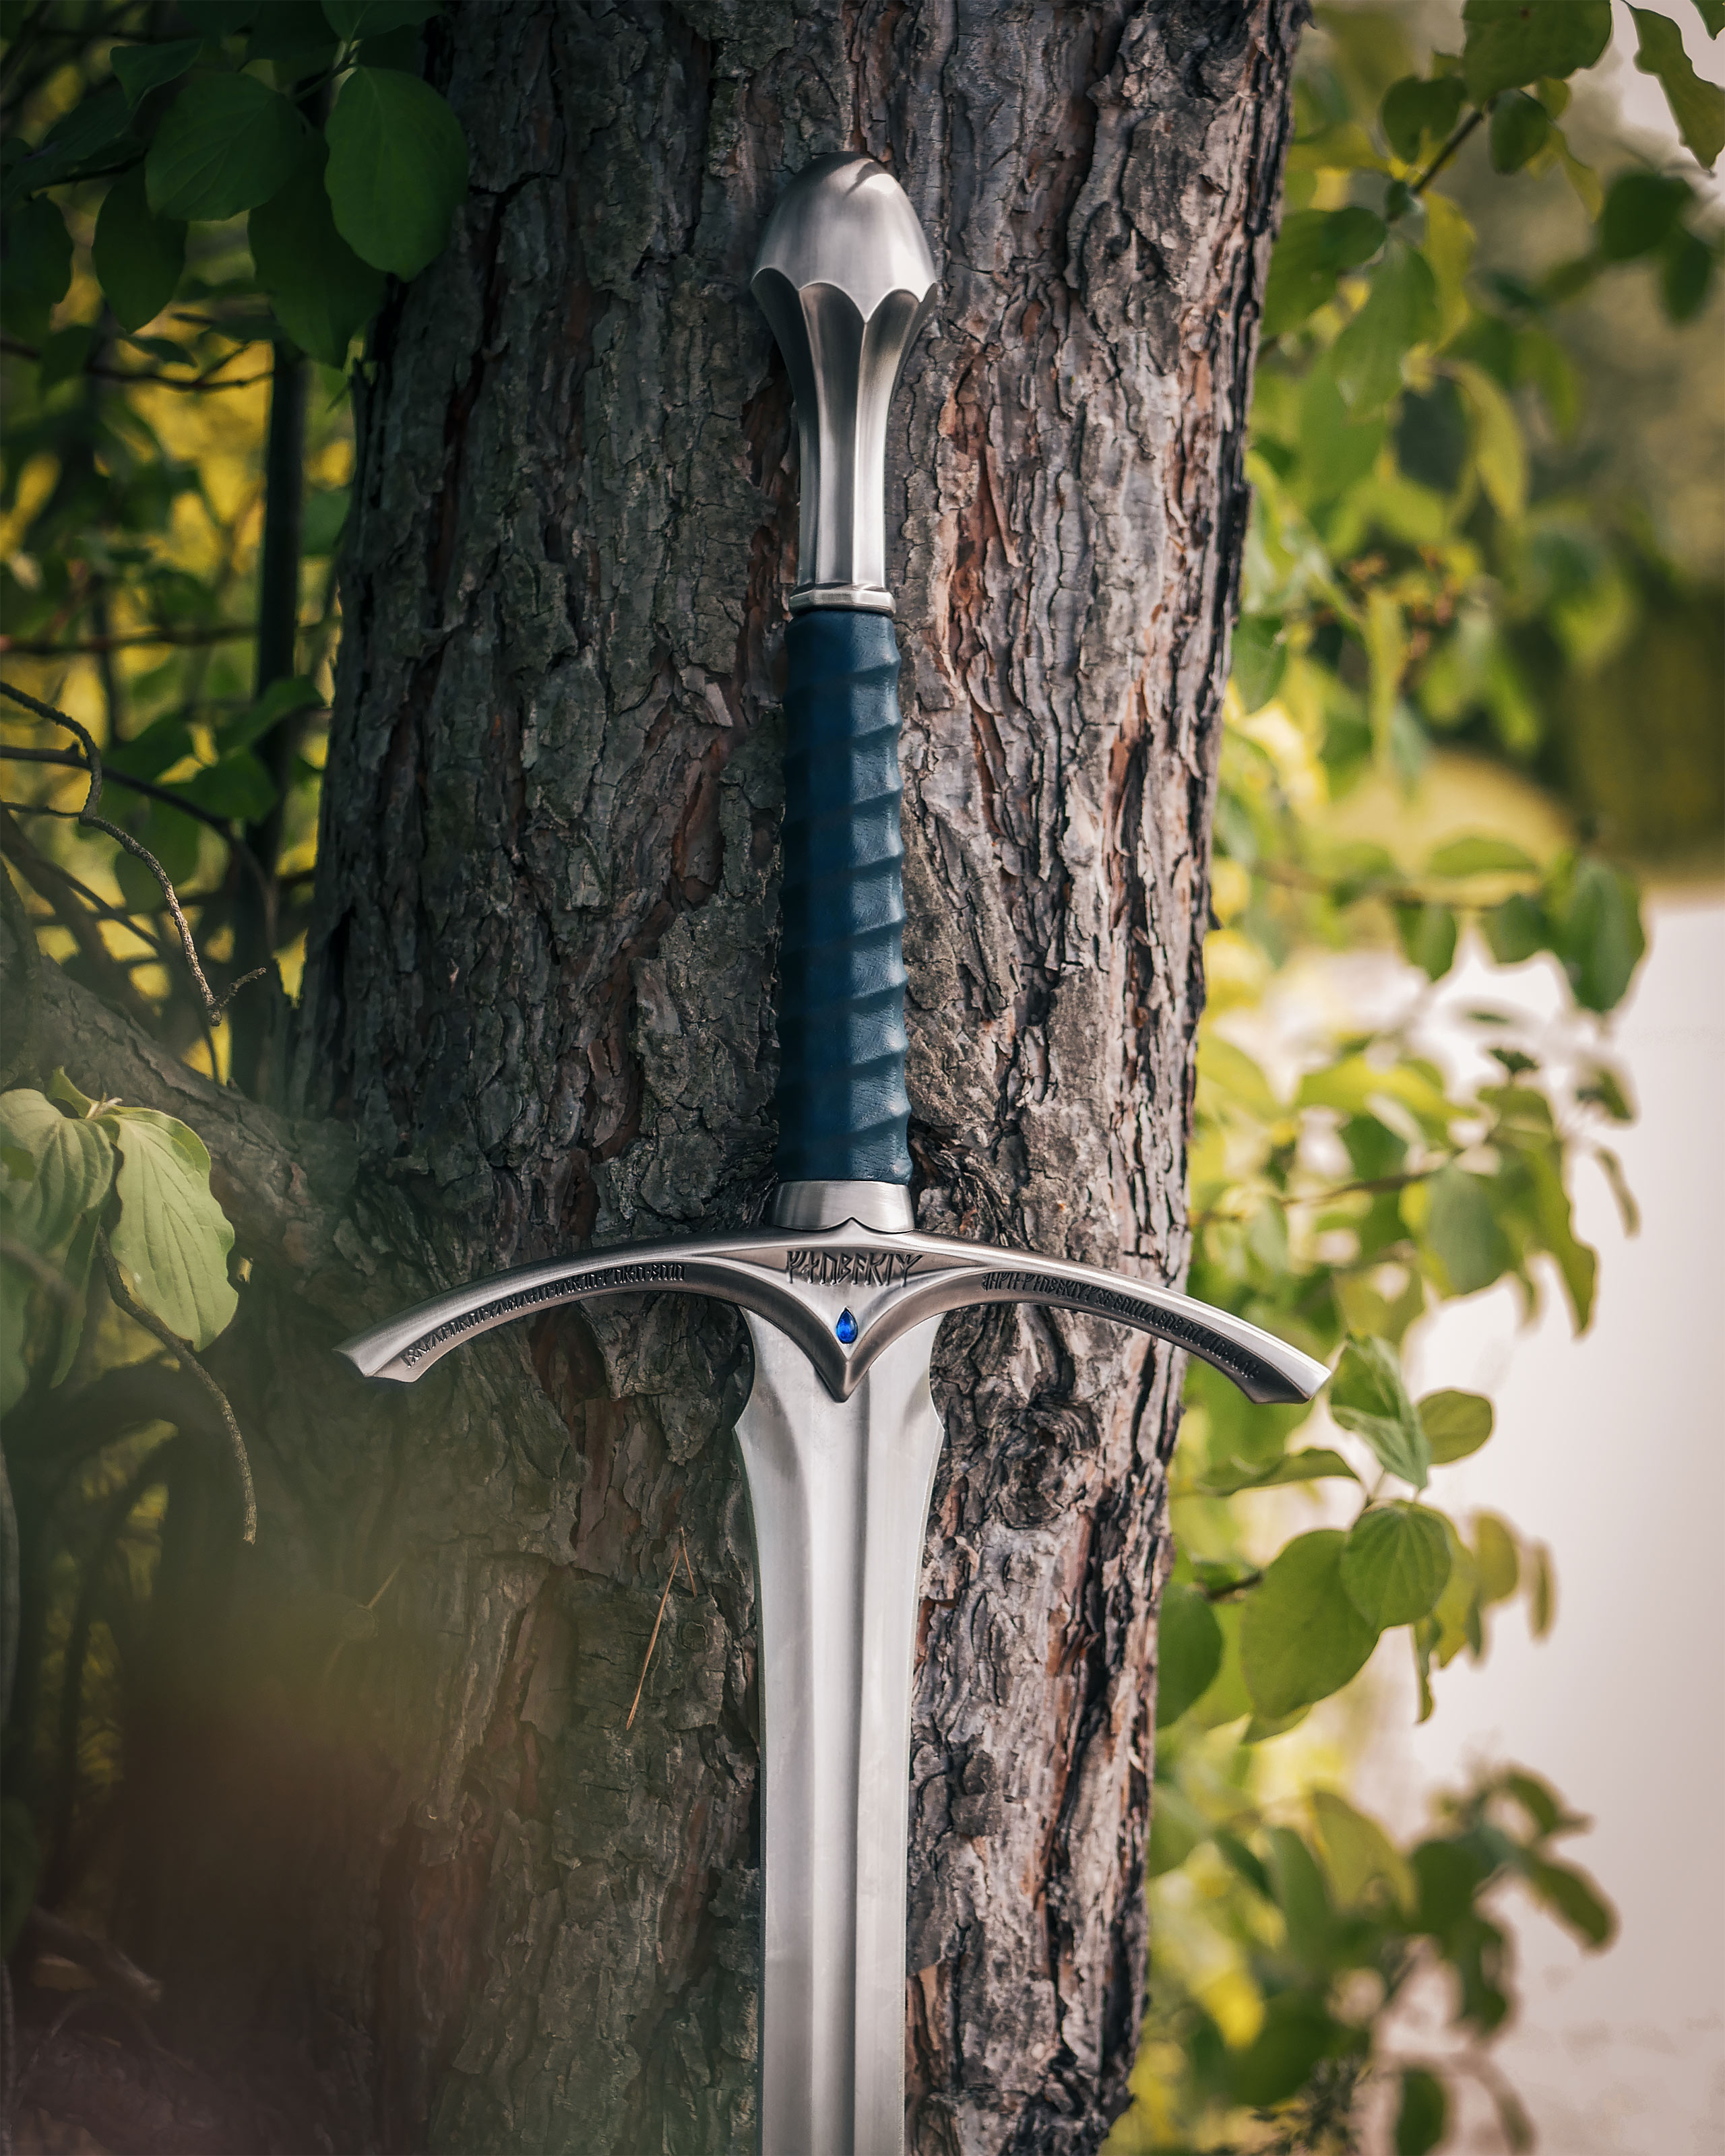 Gandalf's Sword - Glamdring